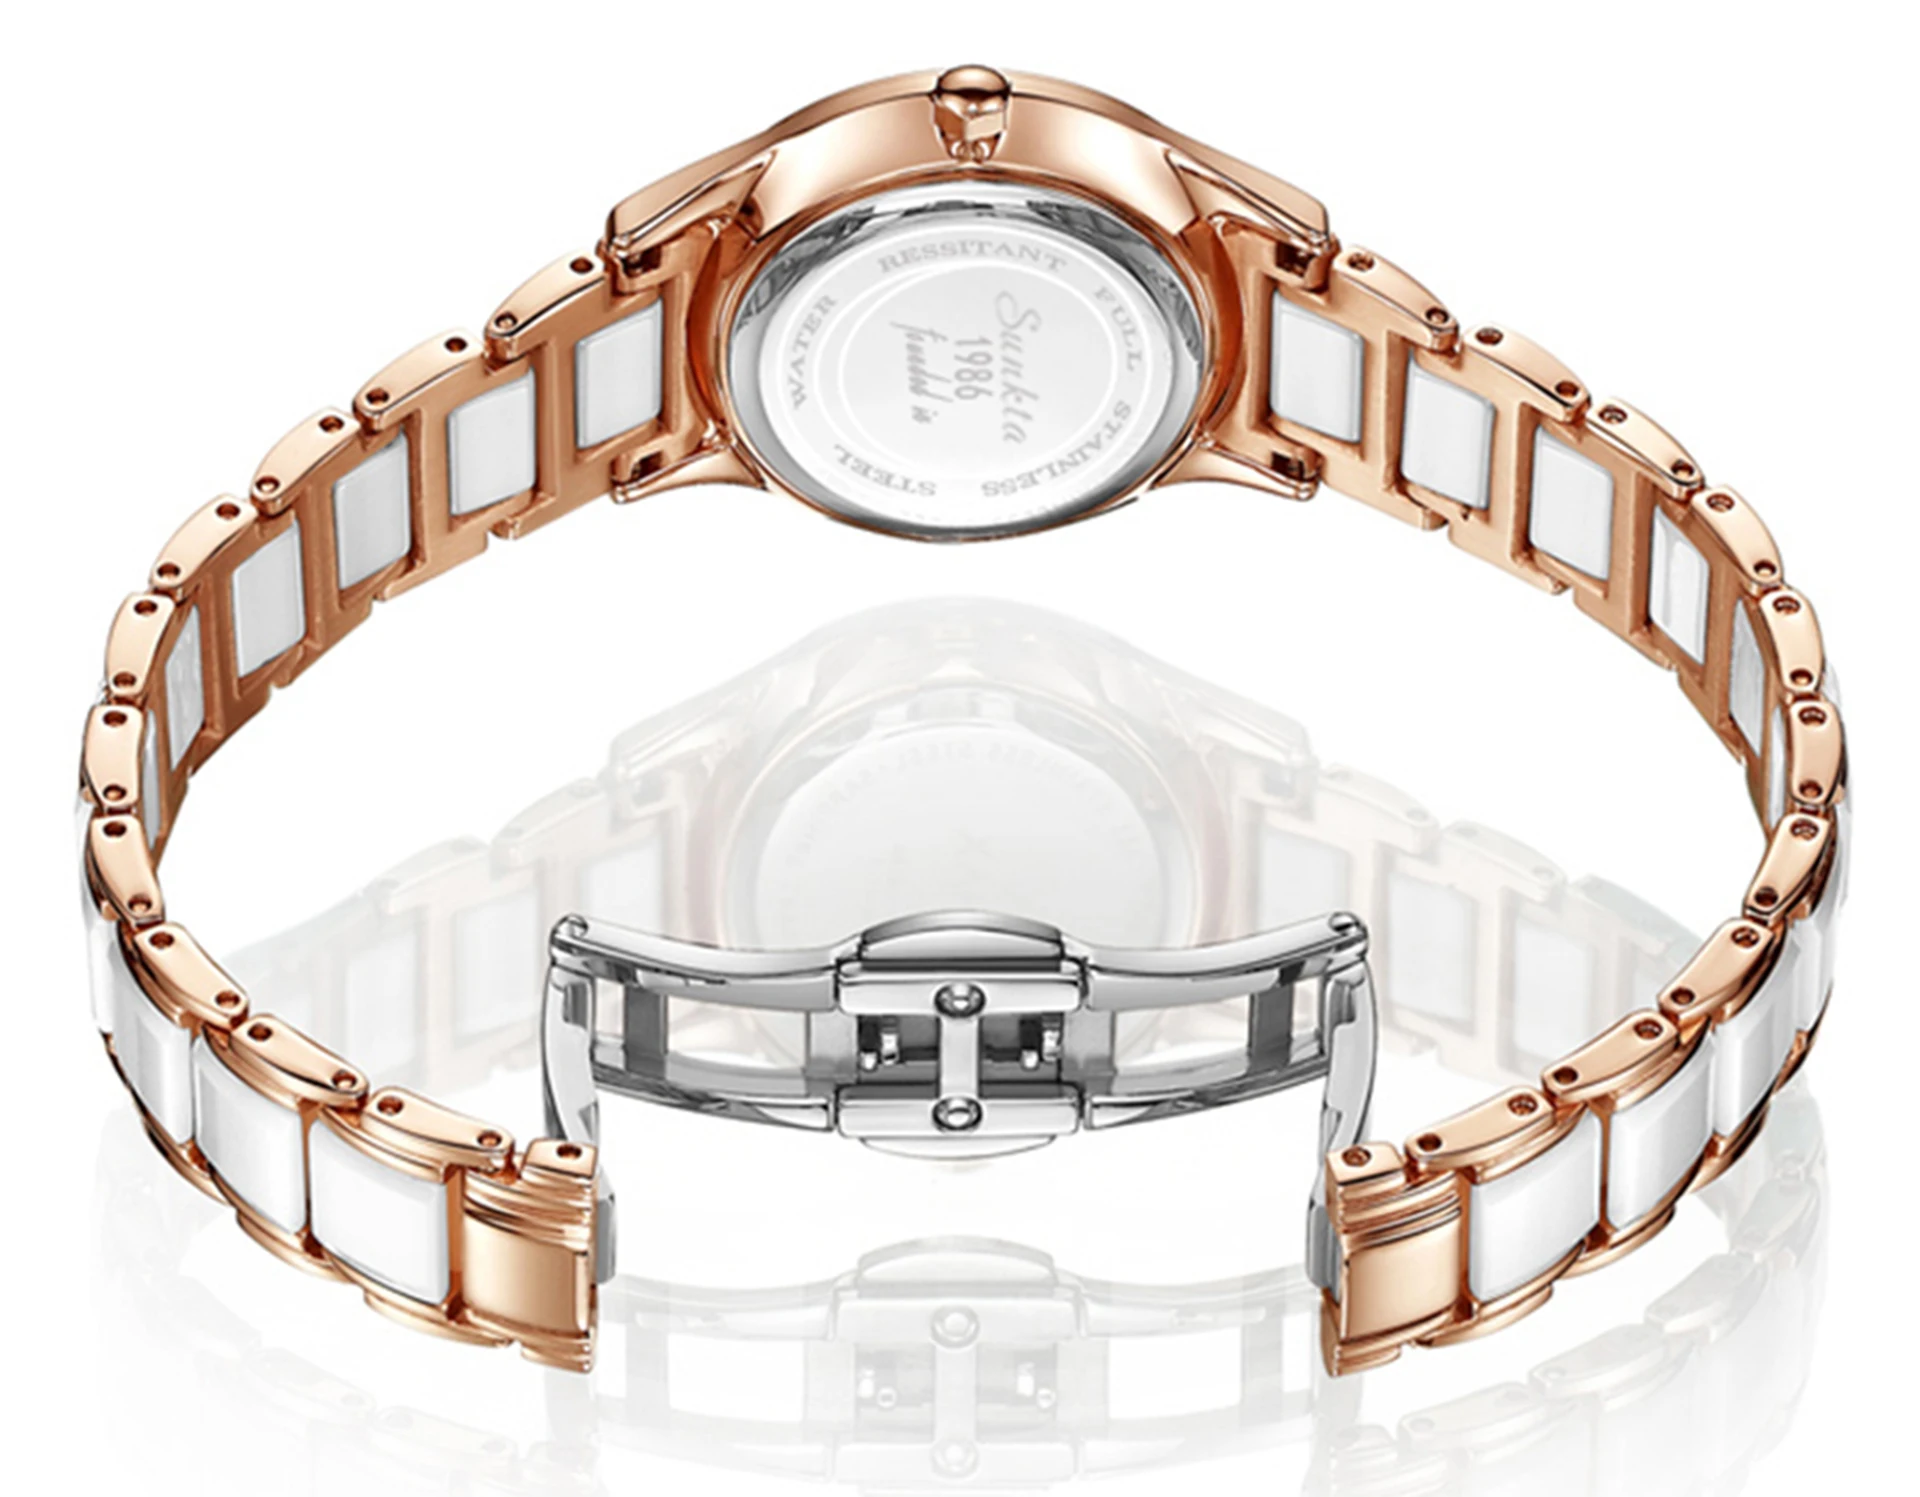 Sunkta Women Watches Top Brand Luxury Ceramic Waterproof Watch Women Casual Fashion Diamond Clock Quartz Ladie Watch Reloj Mujer enlarge